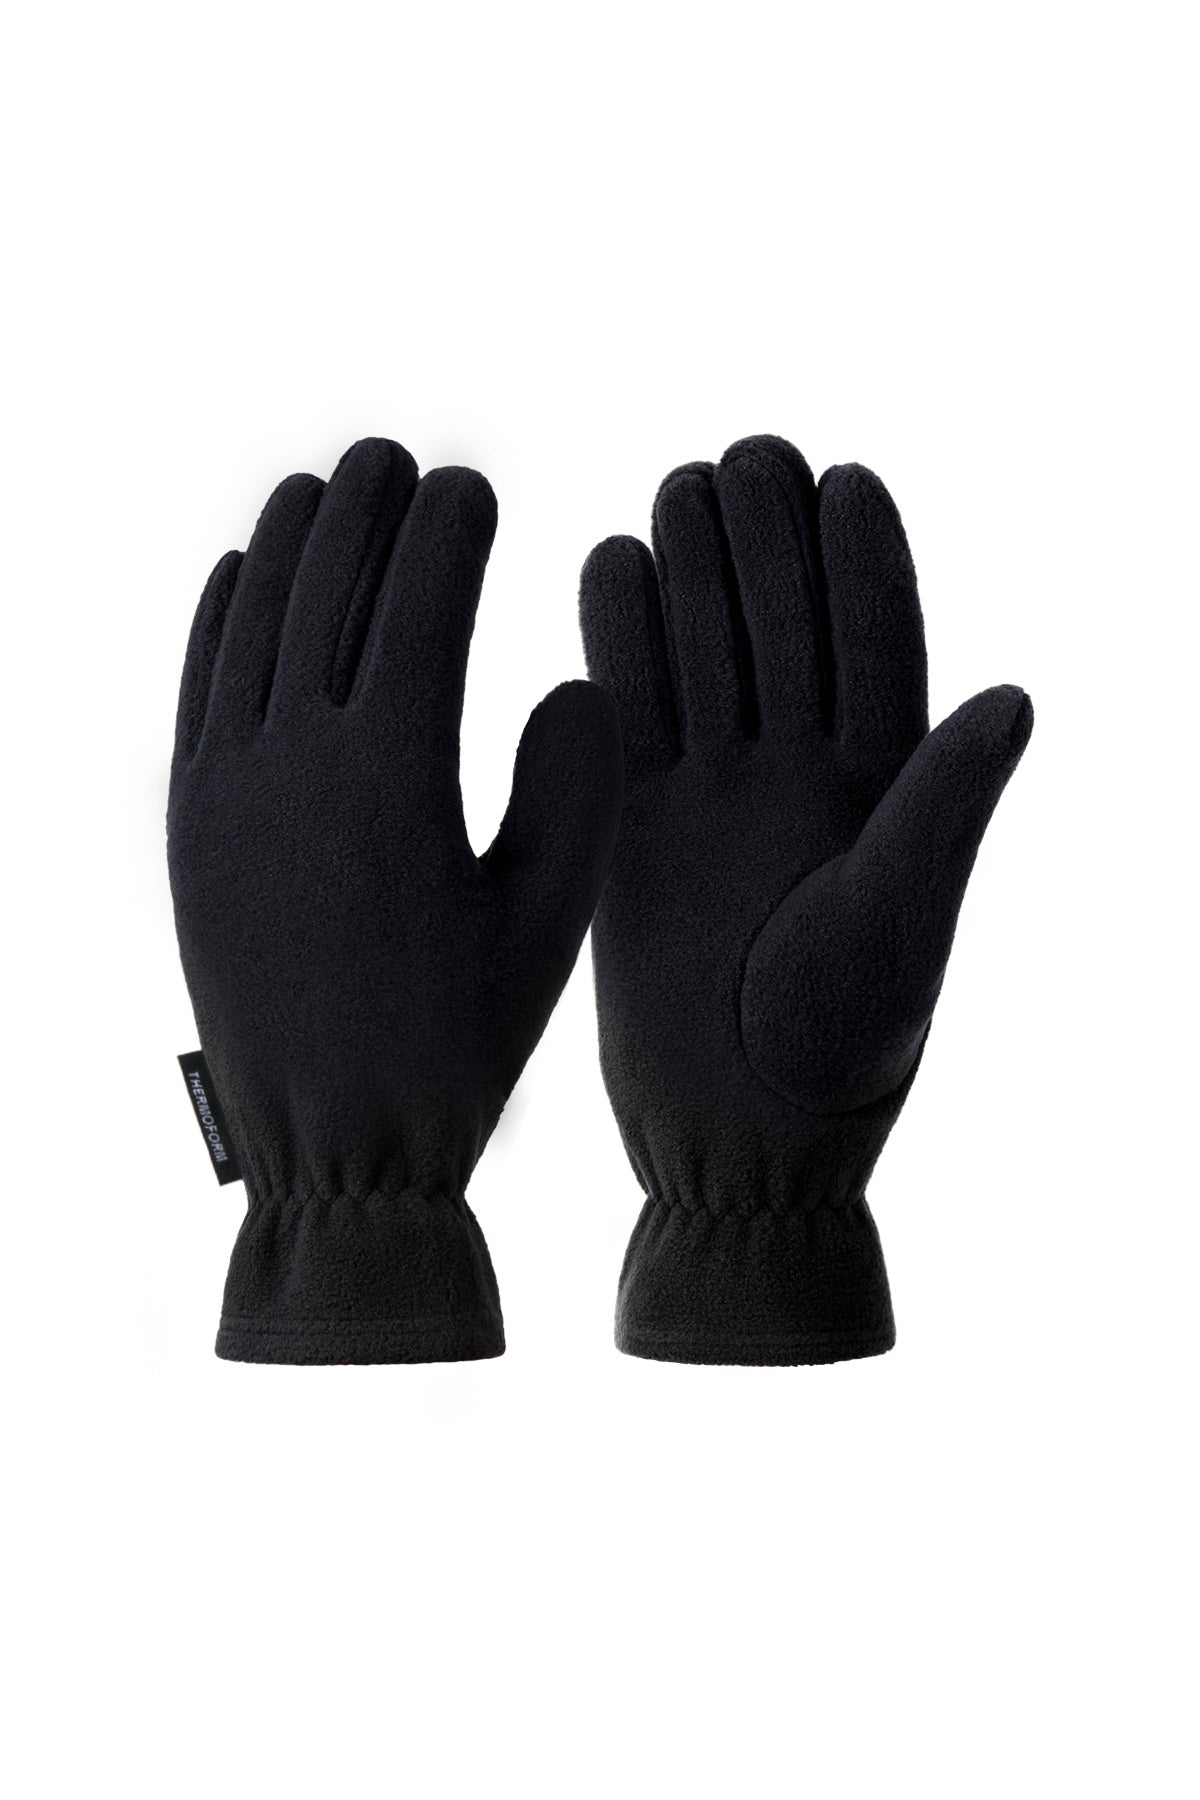 Wholesale Thermal Unisex Gloves for Men & Women Army Grade Fleece Thermal Gloves - Black